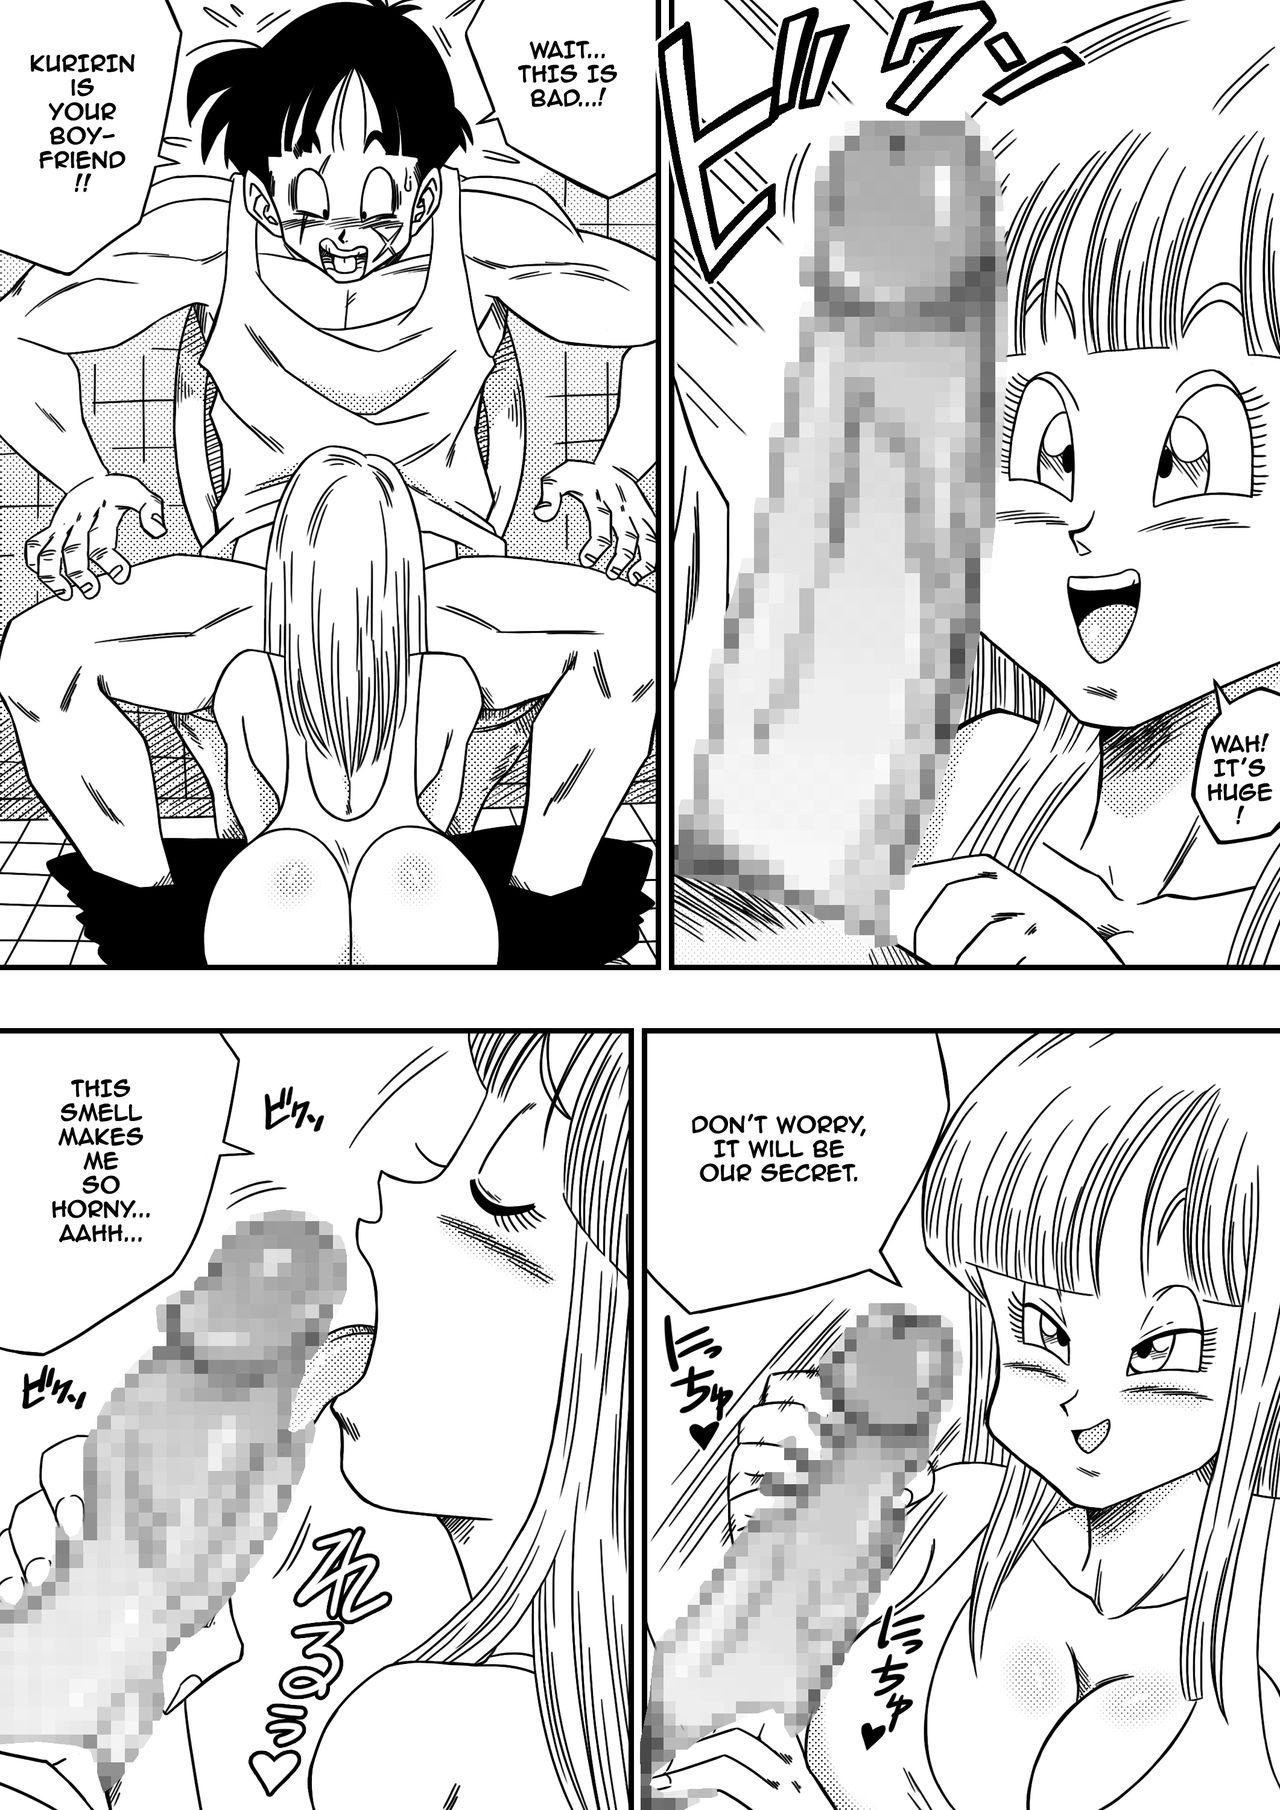 Pendeja BITCH GIRLFRIEND - Dragon ball z Gym - Page 7